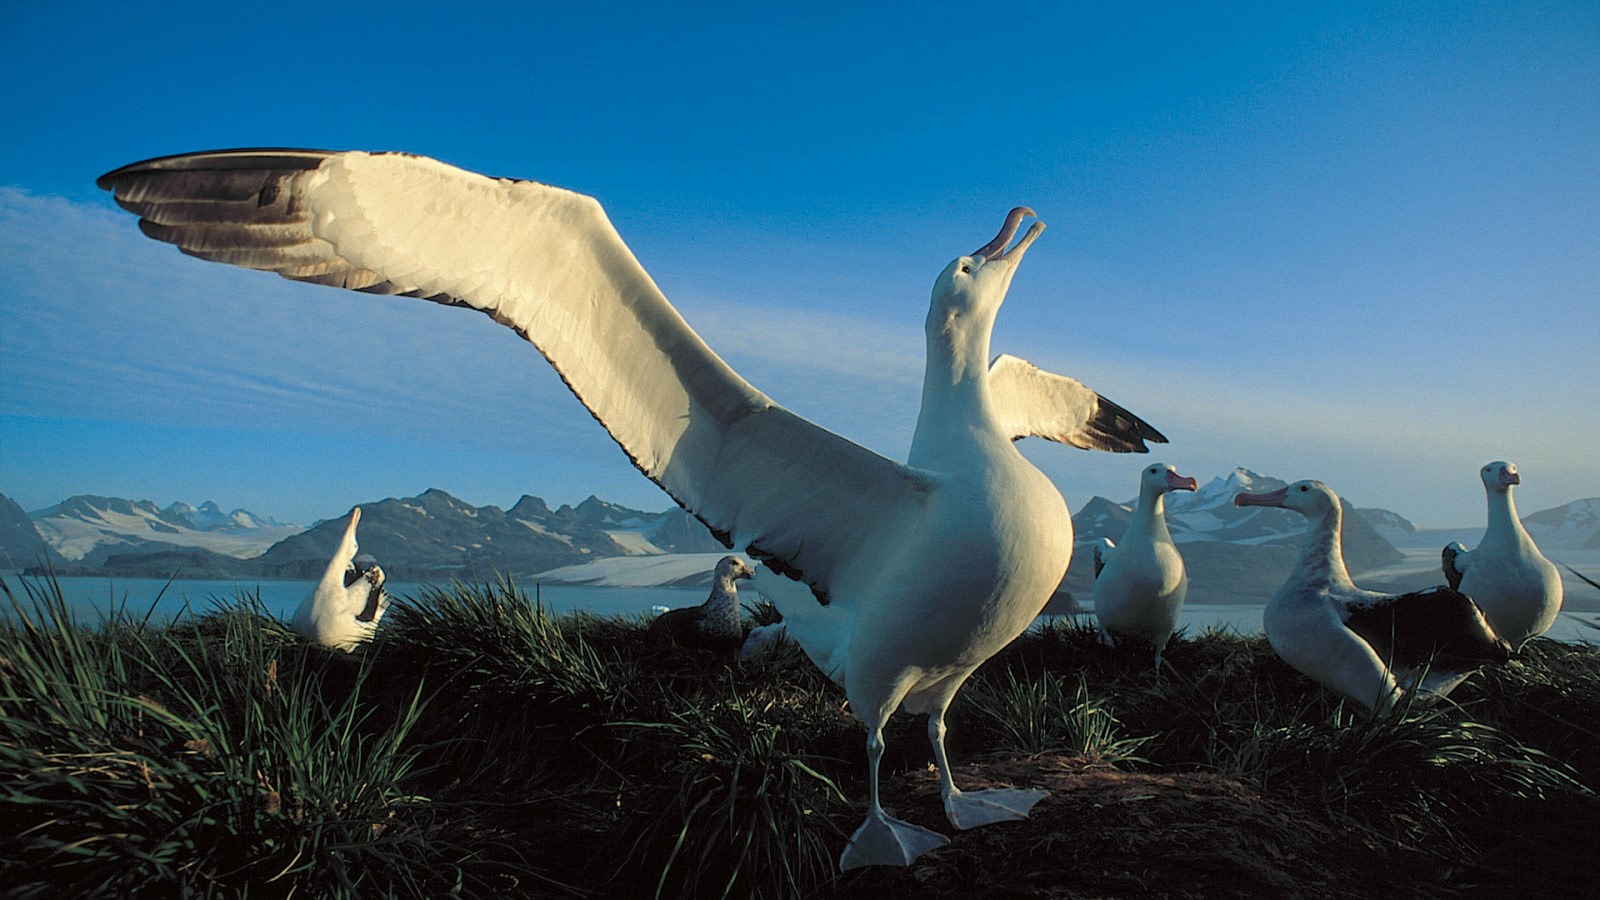 Wandering Albatross | Facts, pictures & more about Wandering Albatross